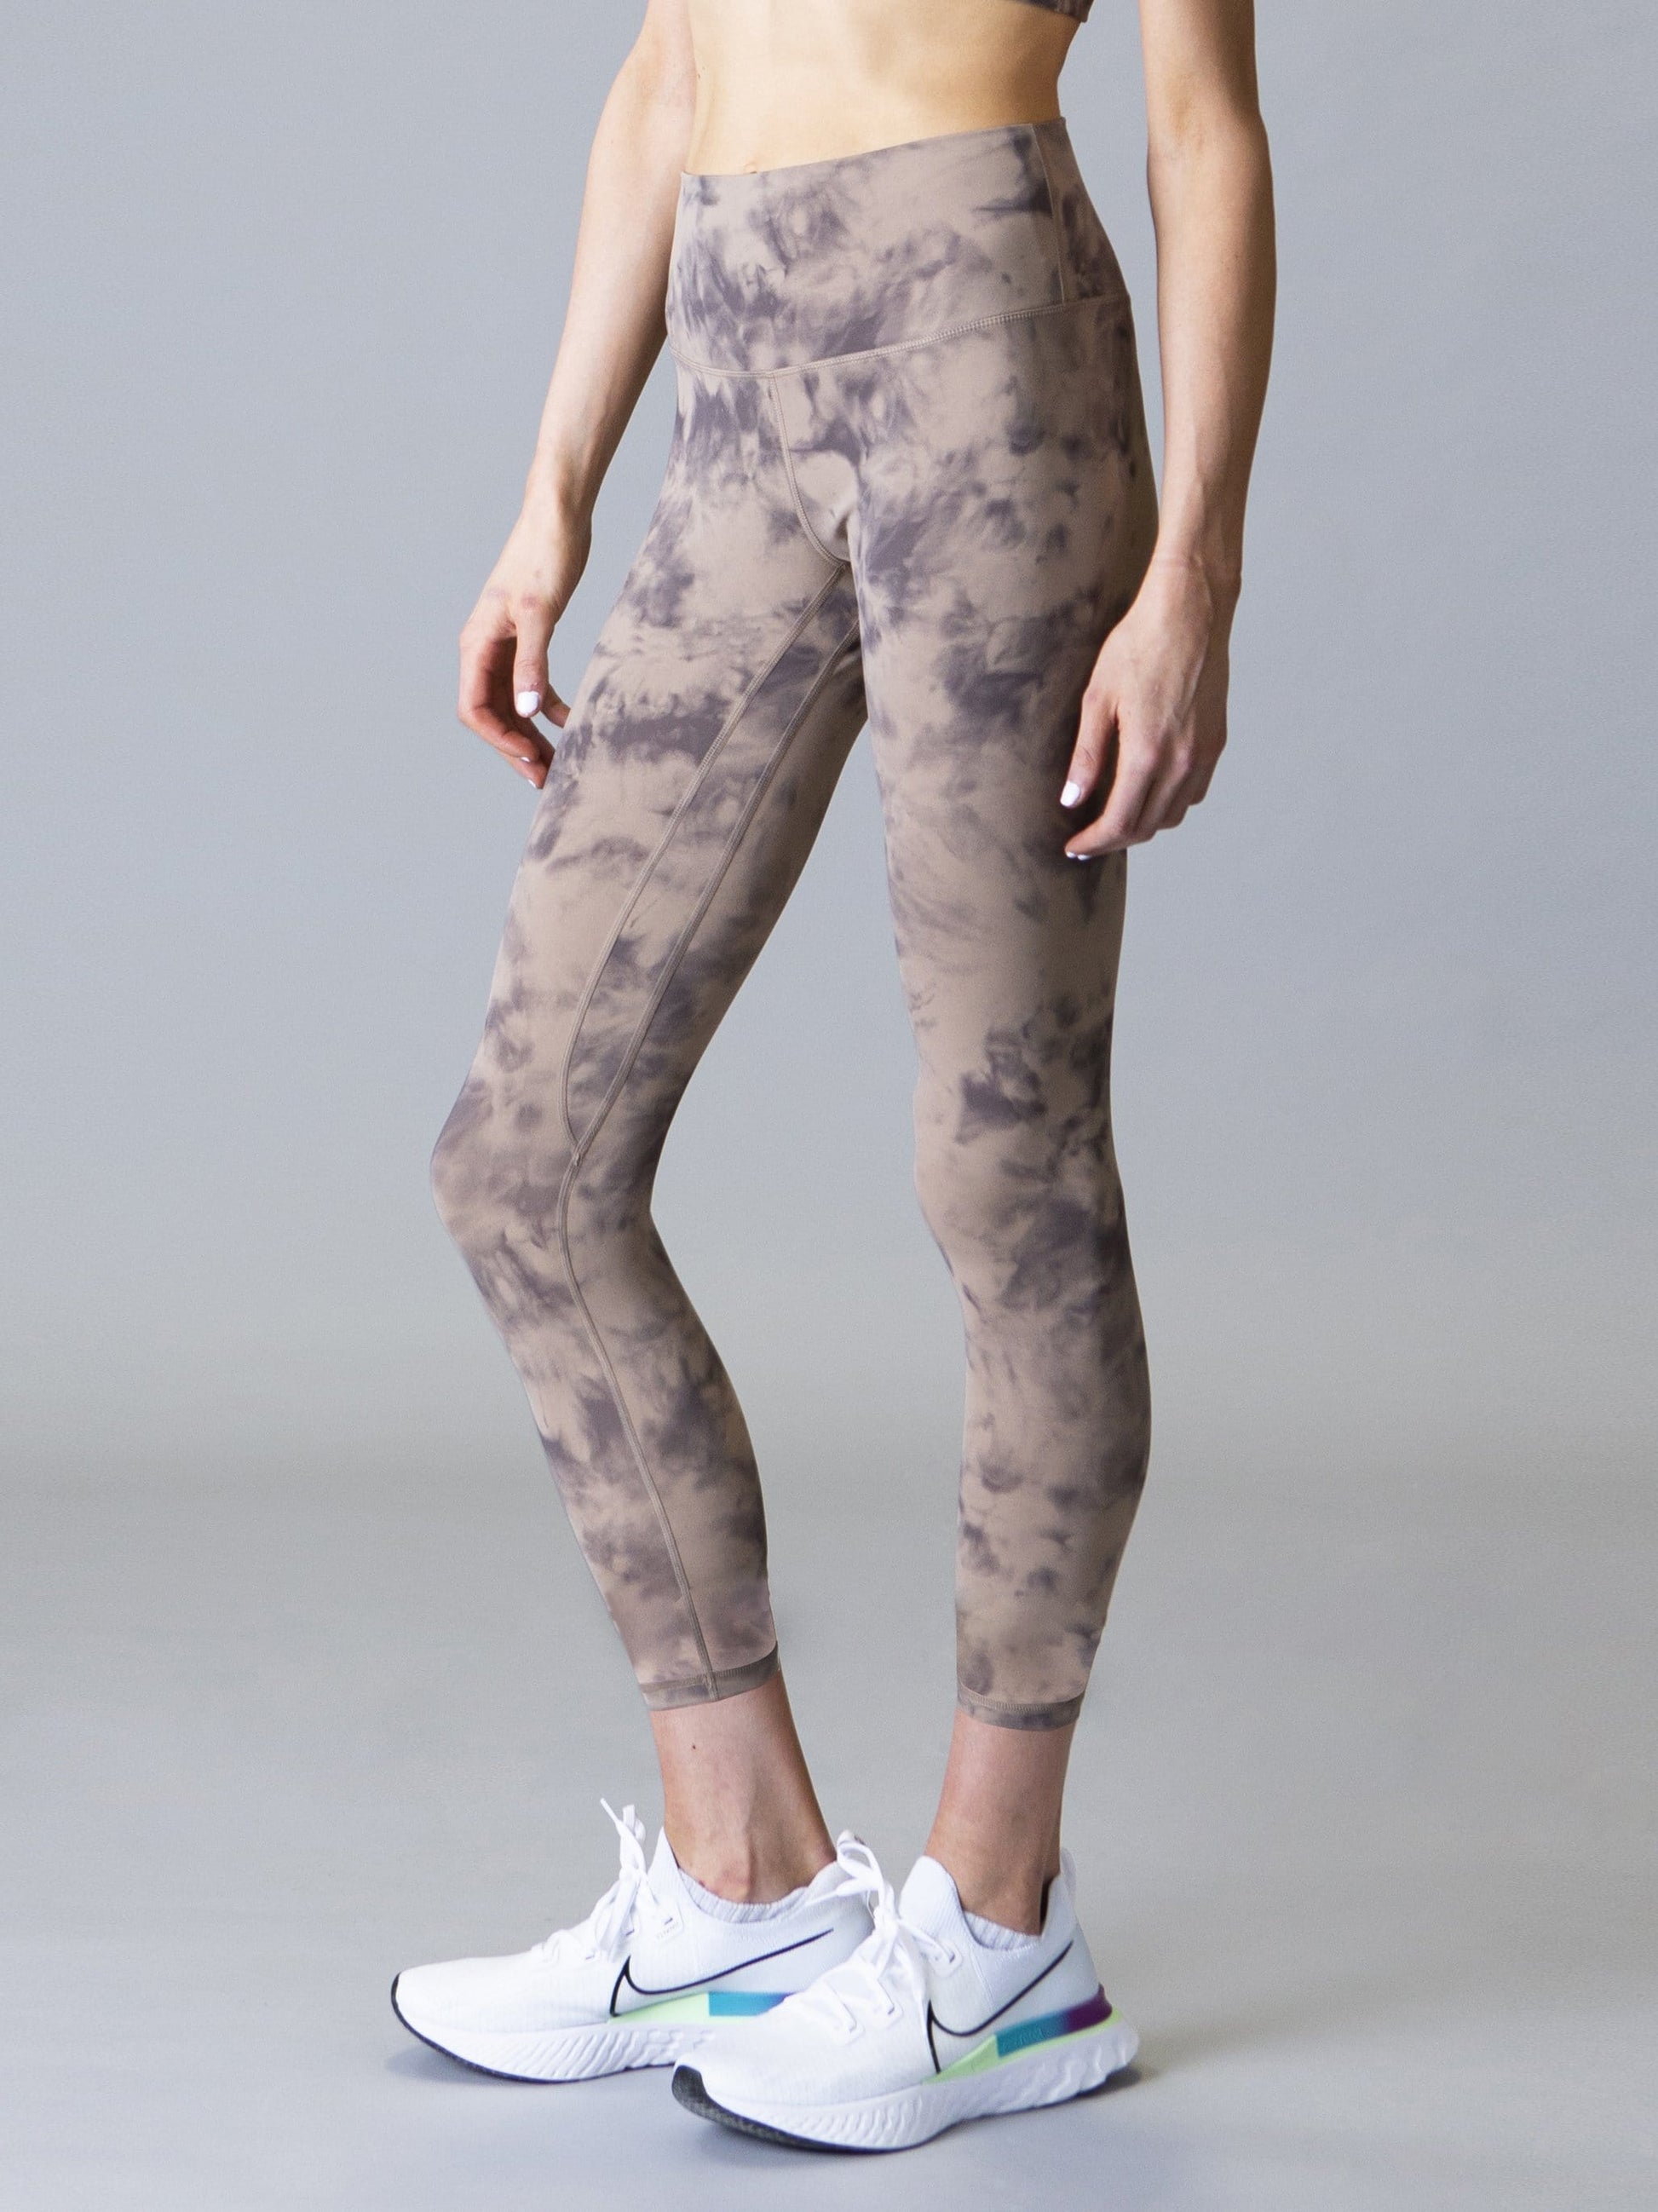 Lululemon Diamond Dye Align Leggings - Athletic apparel